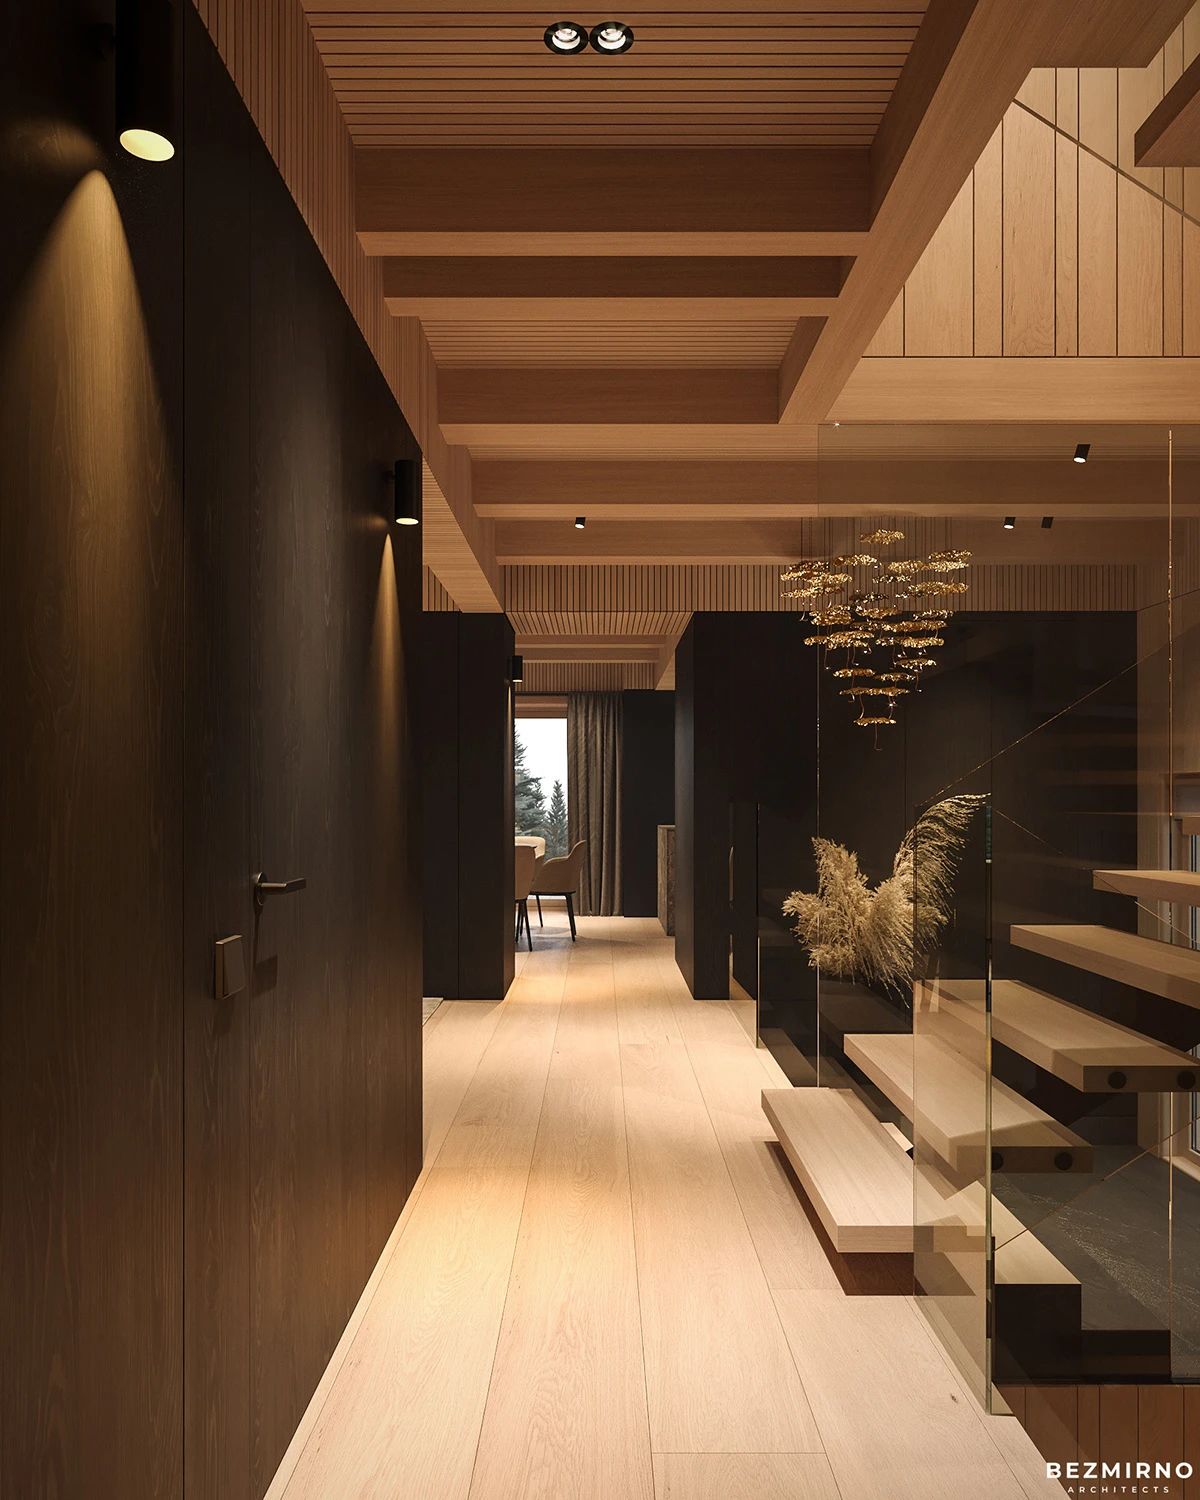 Bezmirno Architects丨法国阿尔卑斯山木屋设计